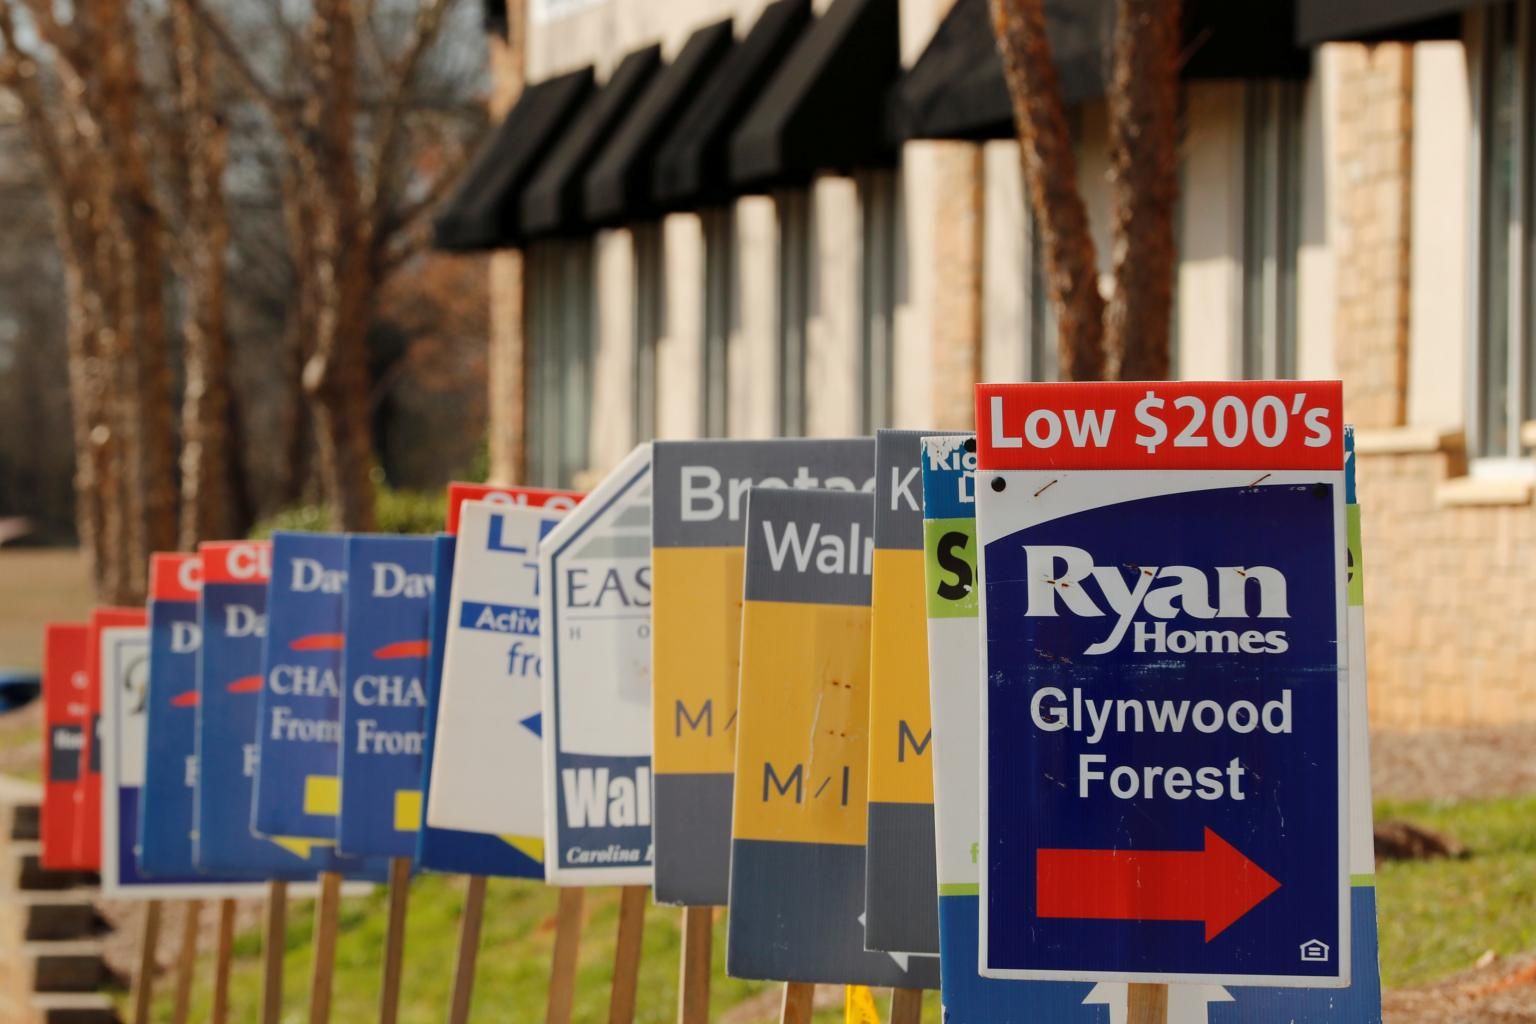 The US housing market grew sharply last year